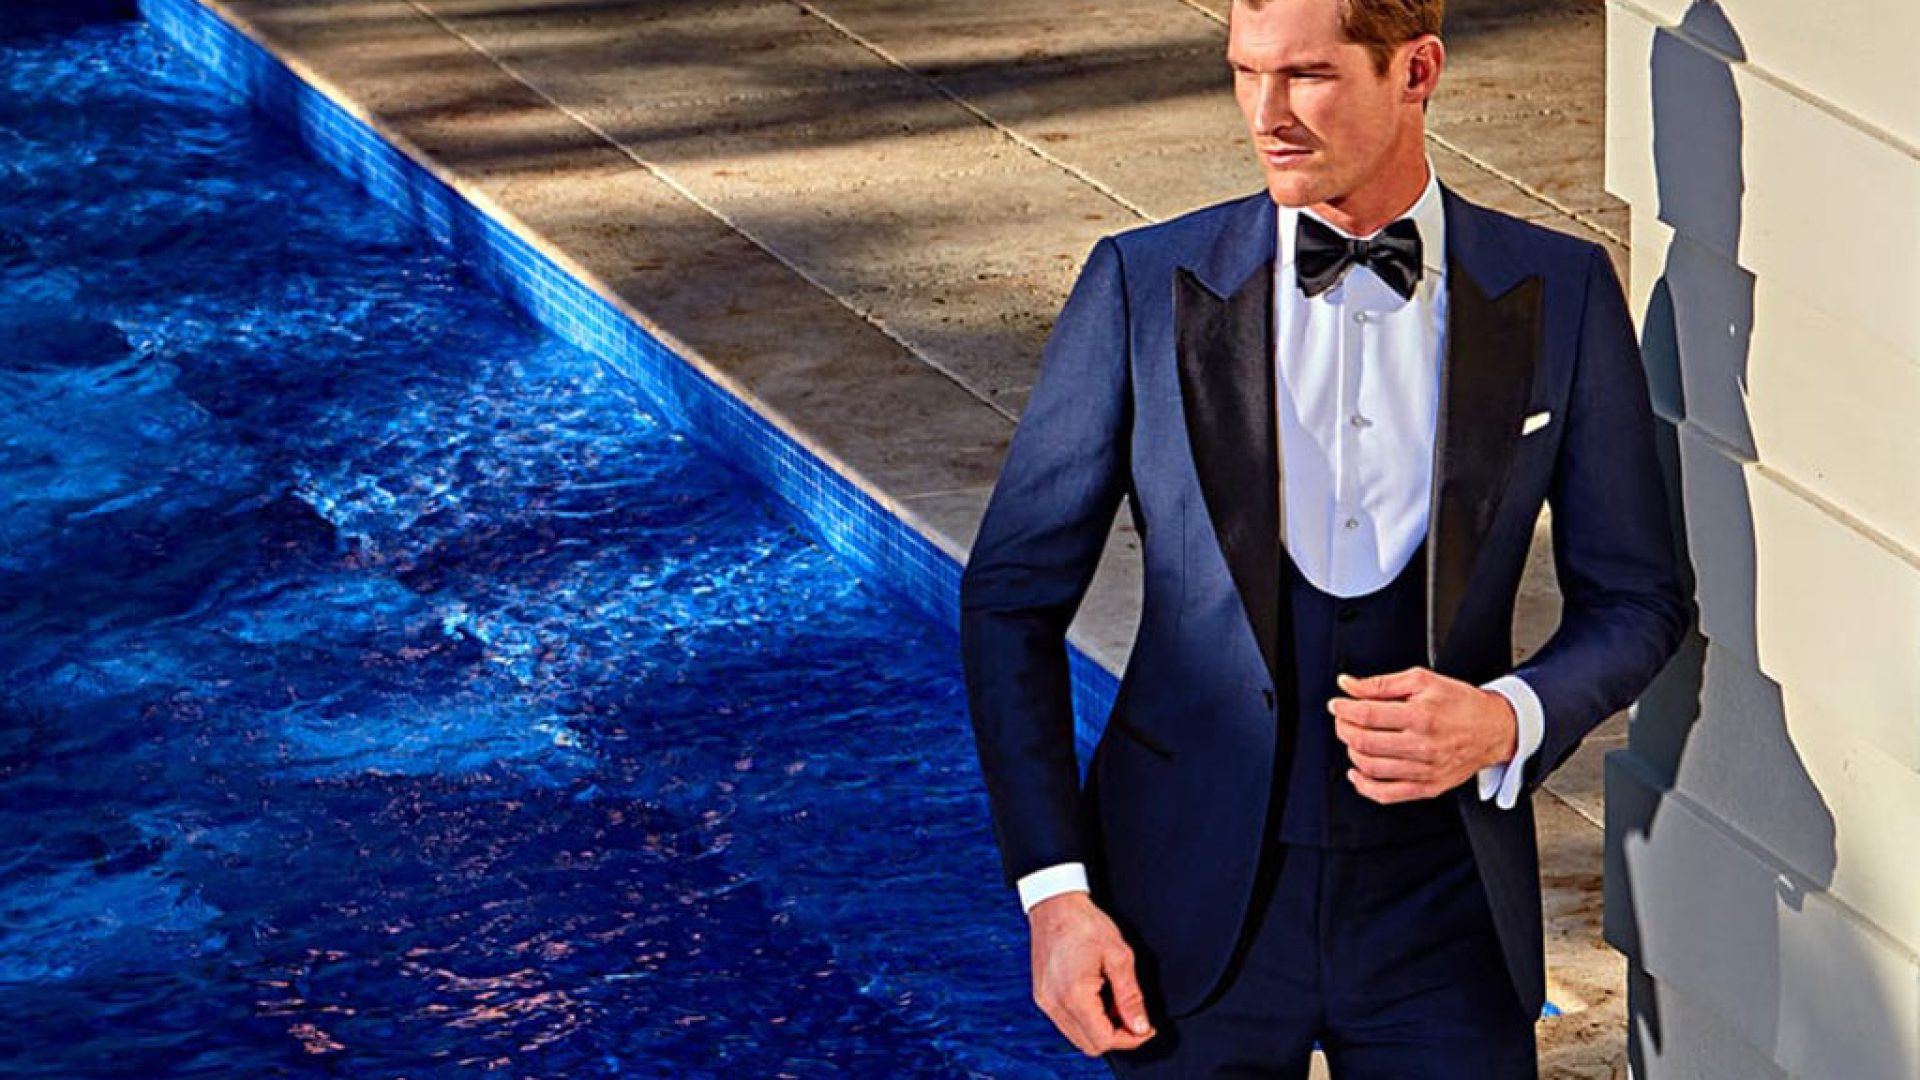 Summer Wedding Attire: The Best Men's Looks for Every Dress Code | Best